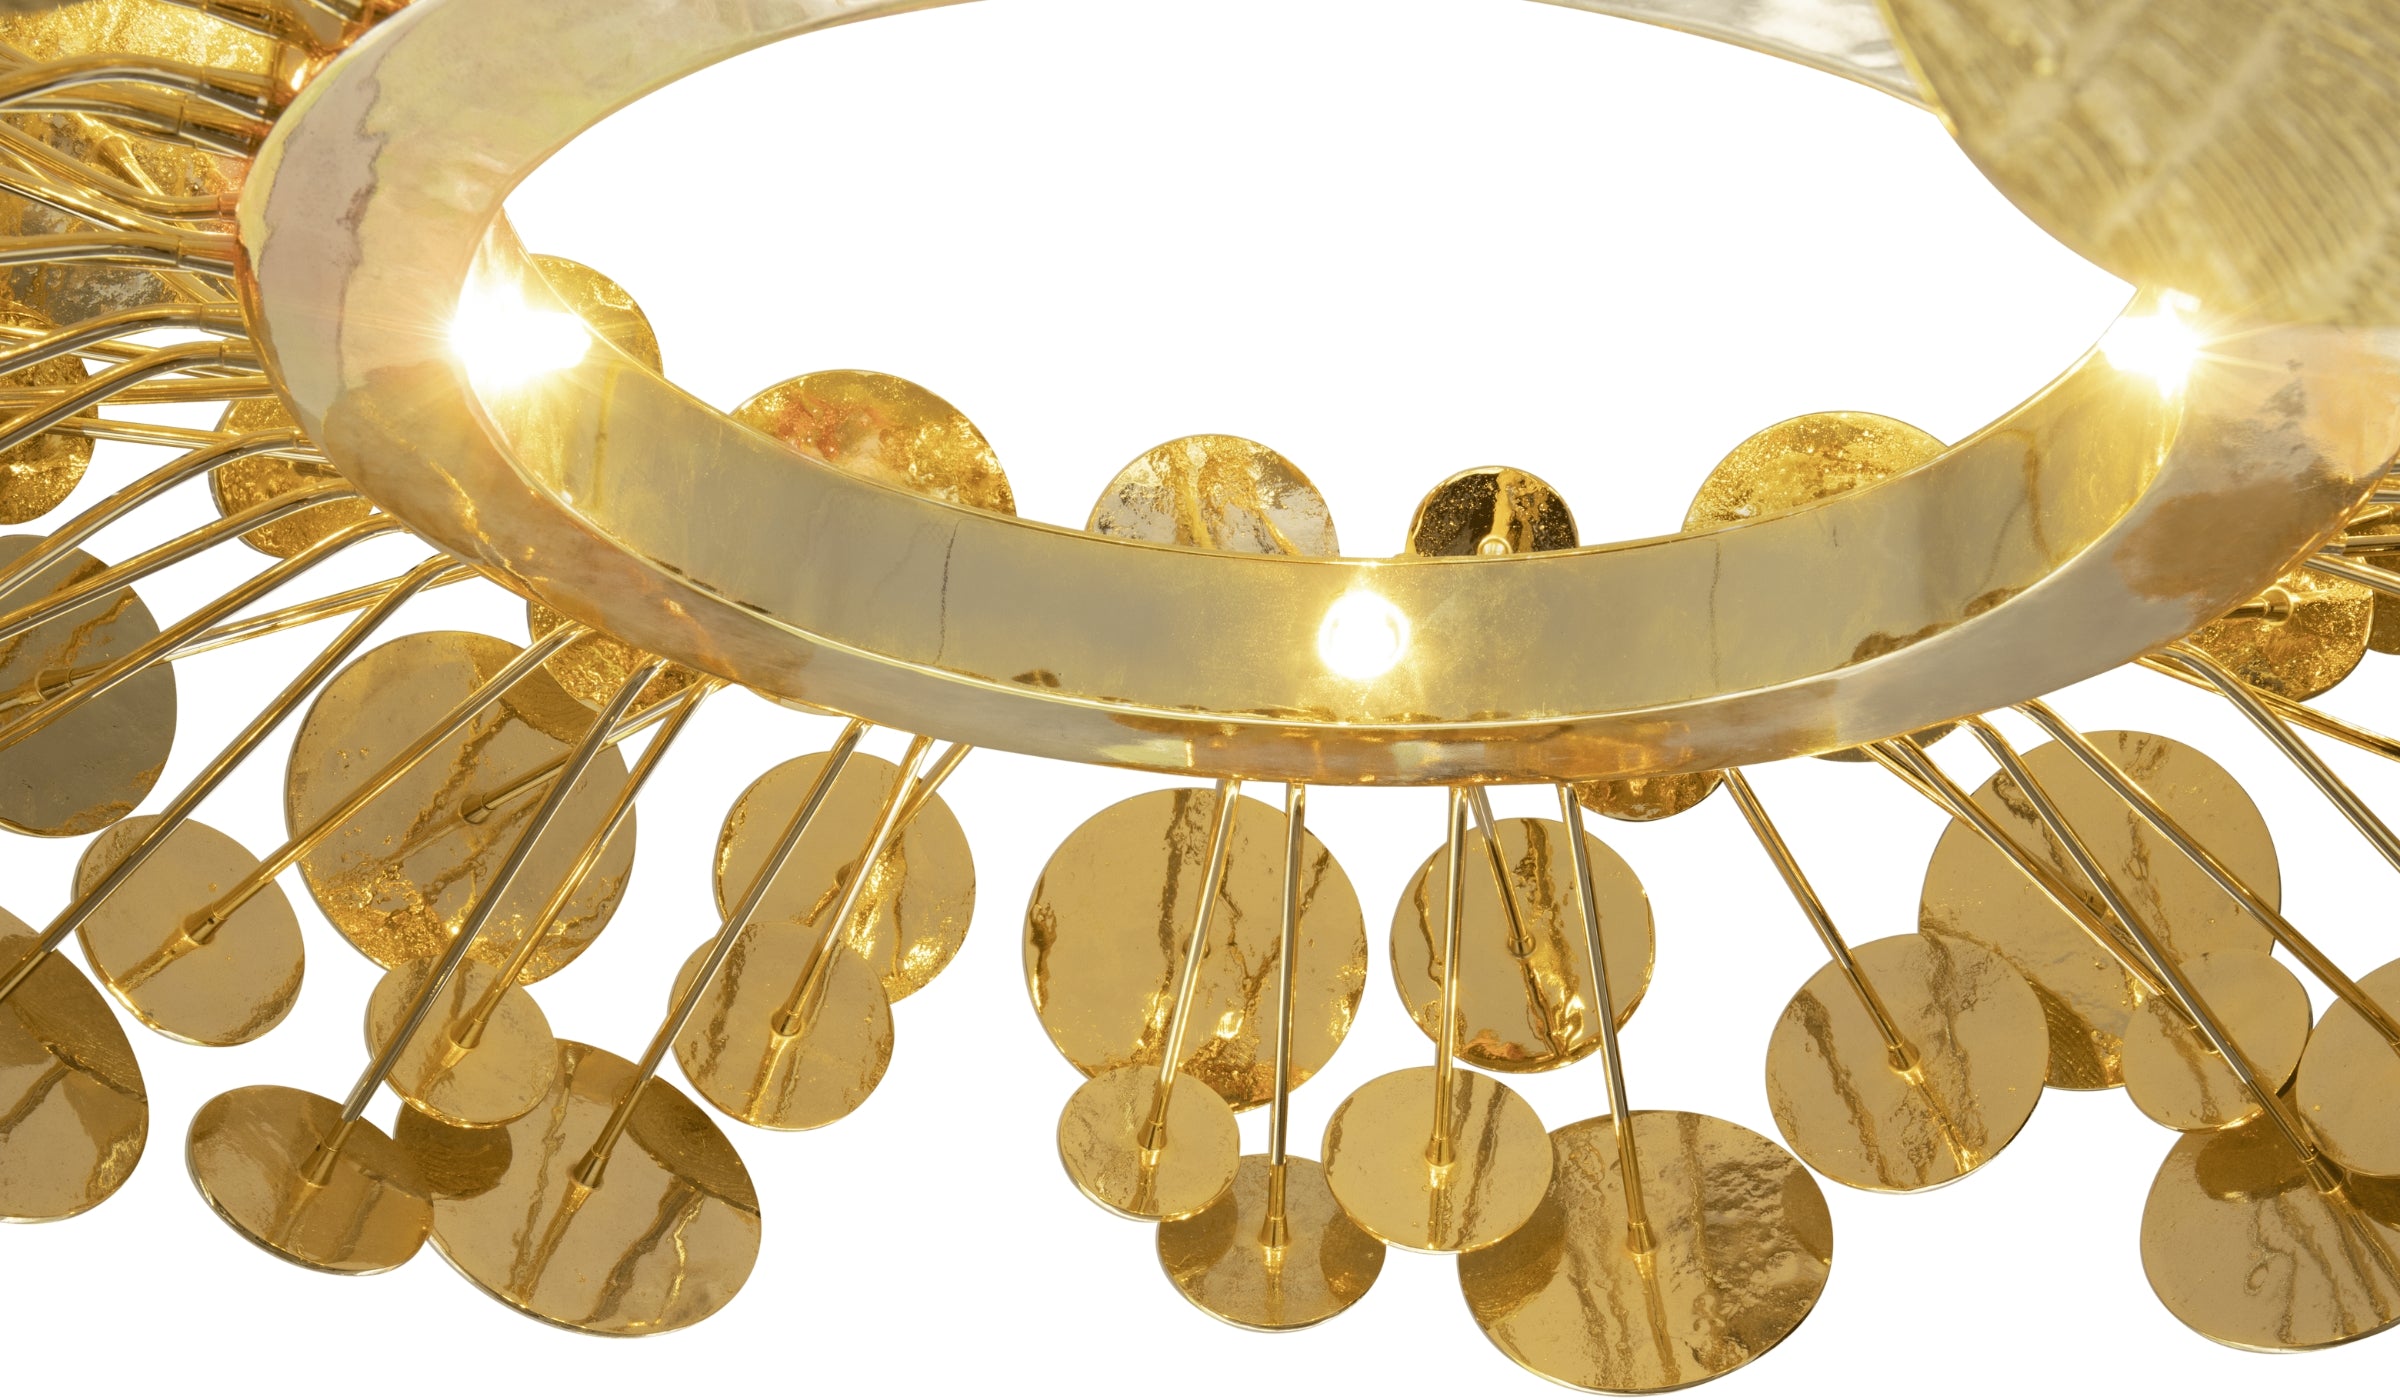 Newton Chandelier - Artistic elliptical pendant light in gold-plated aluminum